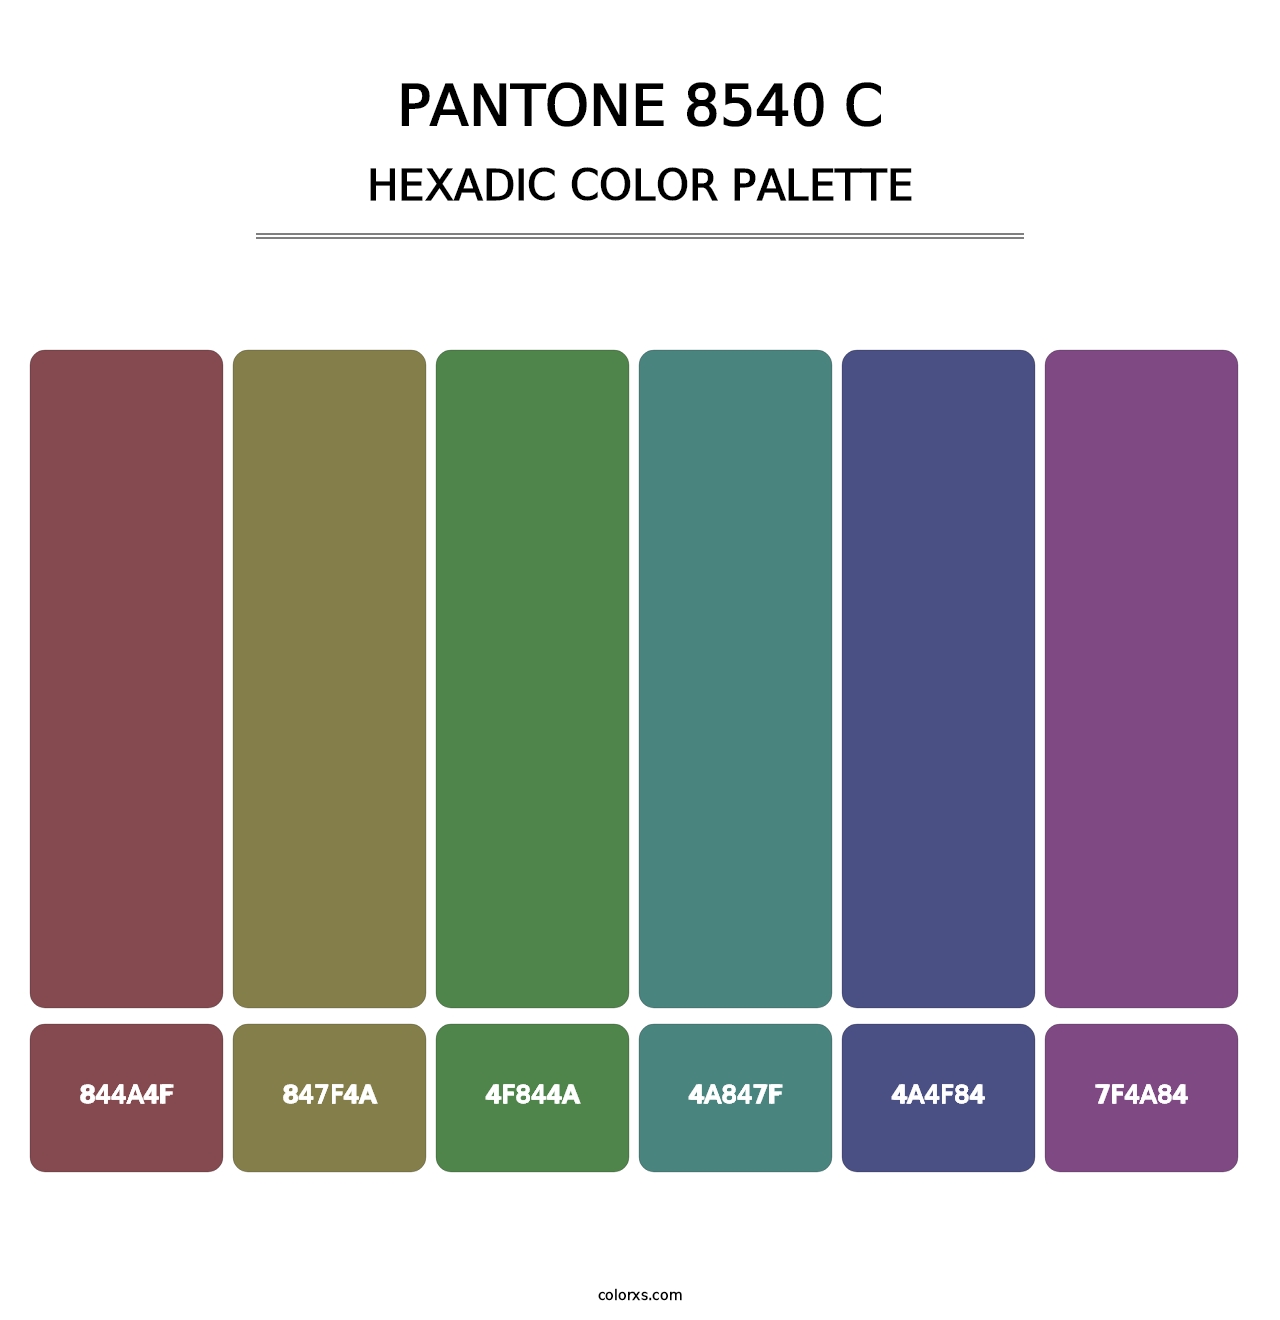 PANTONE 8540 C - Hexadic Color Palette